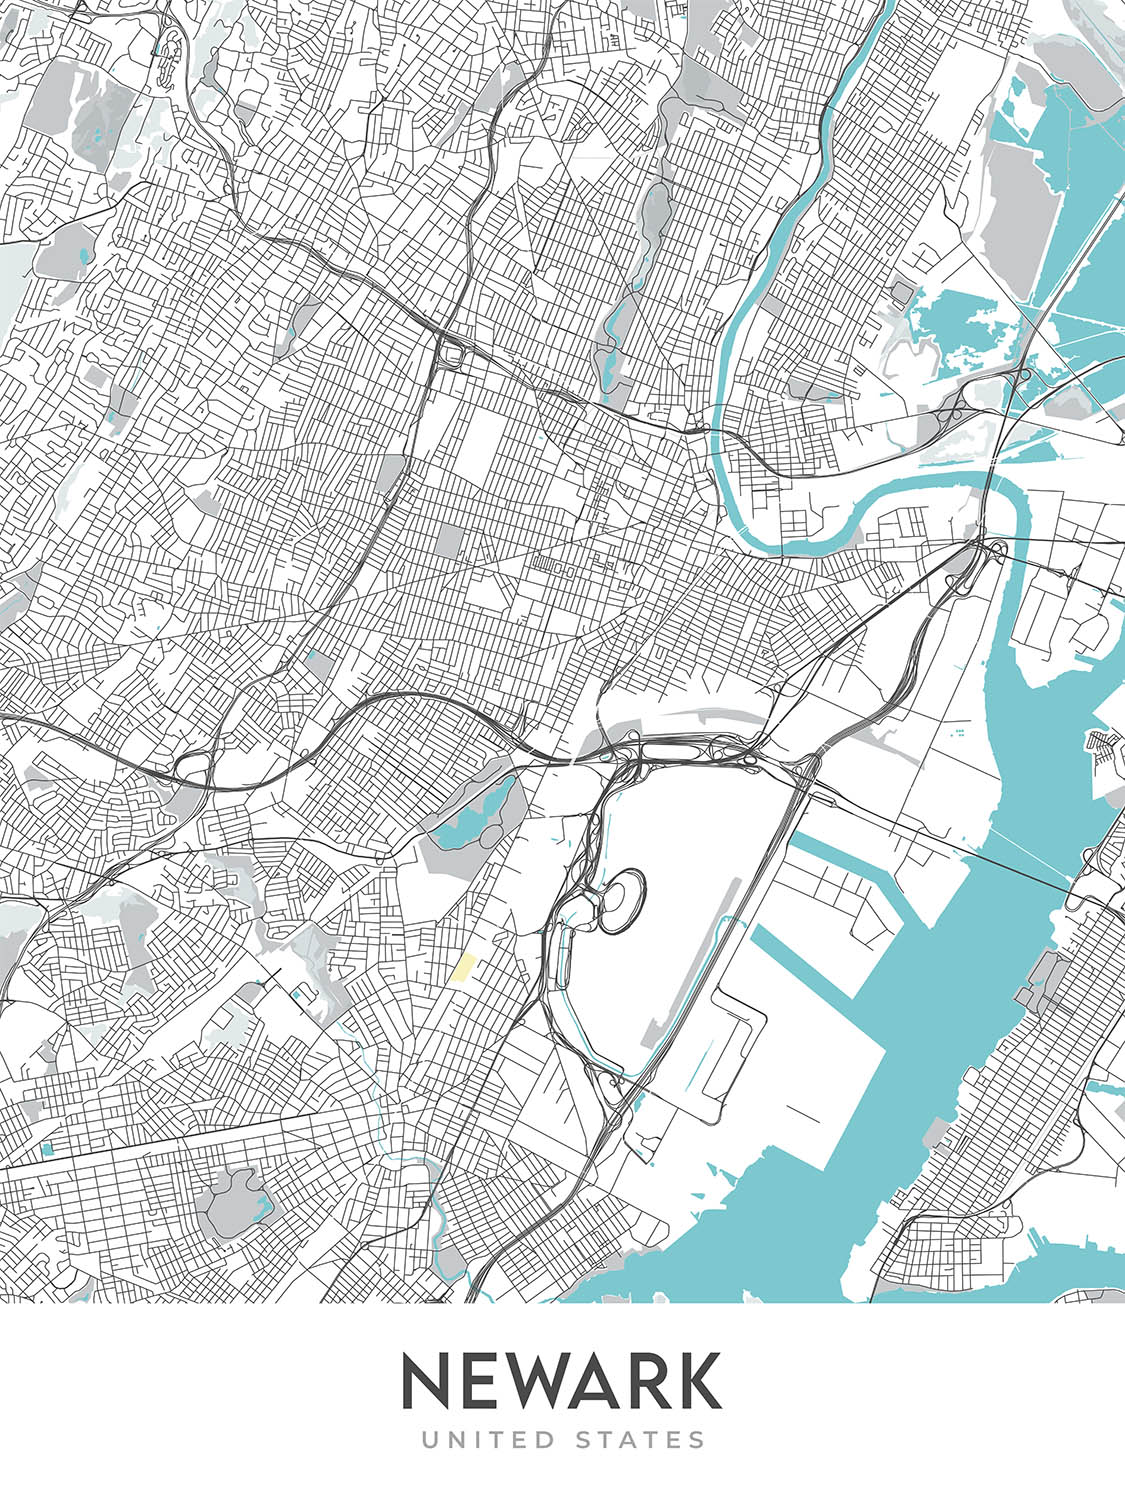 Mapa moderno de la ciudad de Newark, Nueva Jersey: centro, Ironbound, Prudential Center, Rutgers, NJ Turnpike